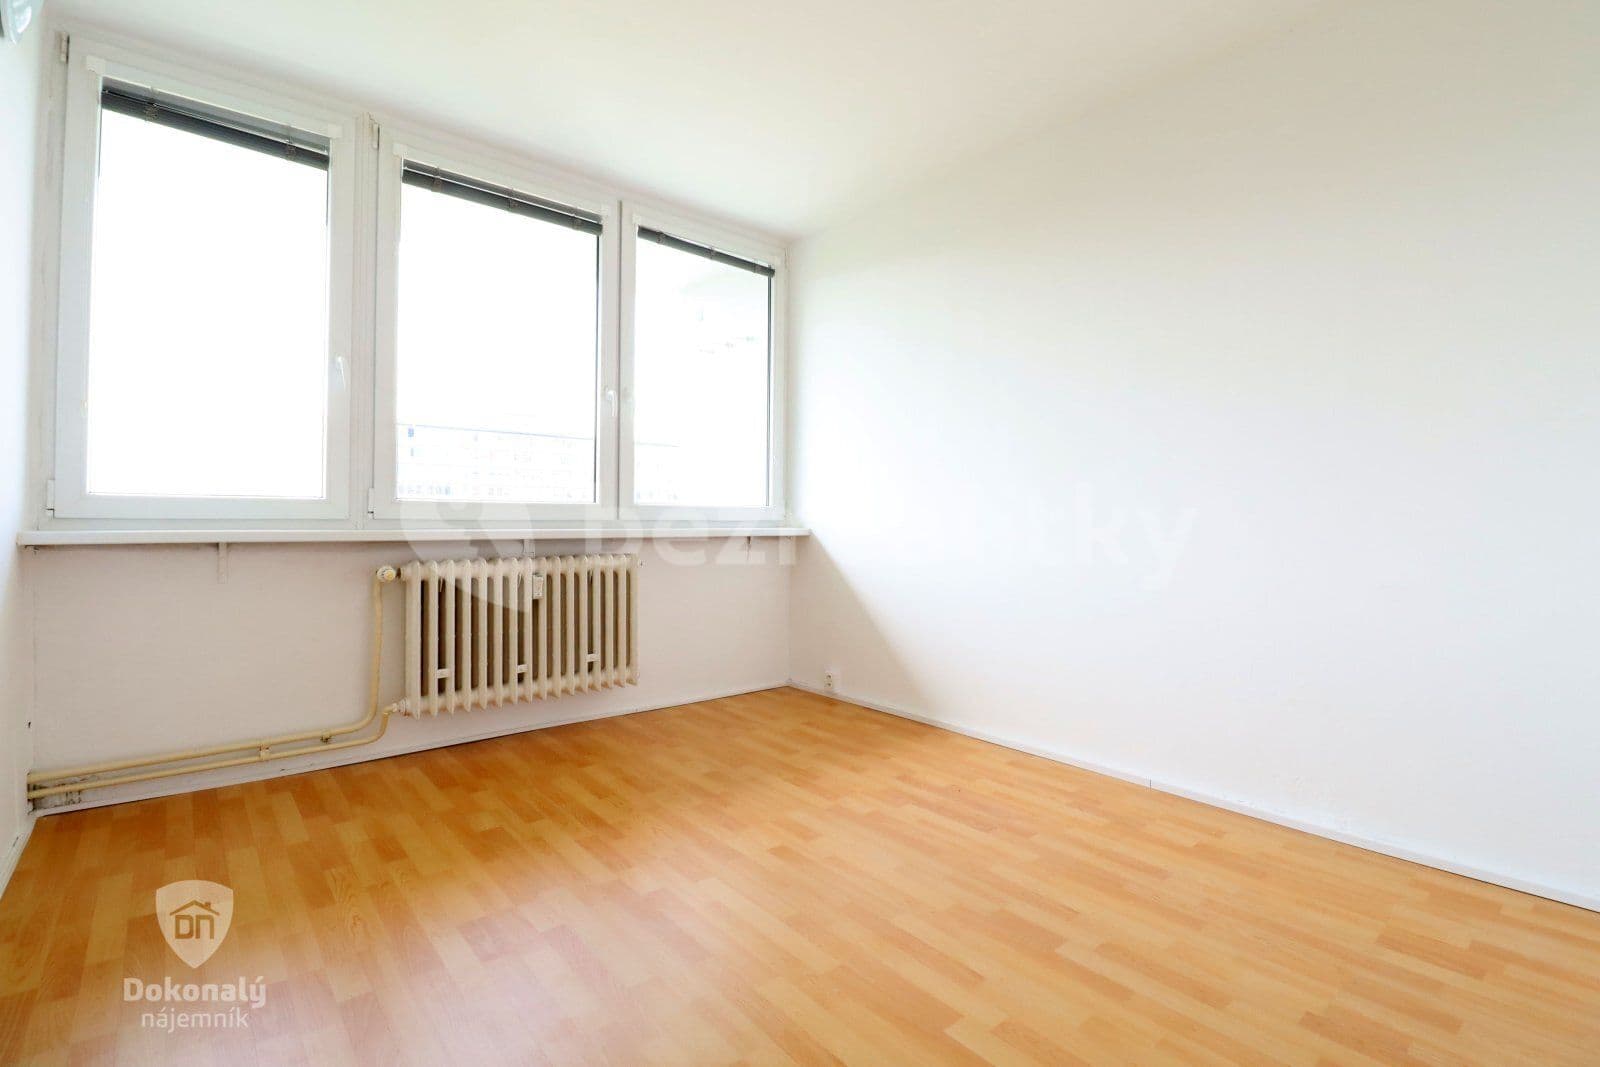 1 bedroom with open-plan kitchen flat to rent, 48 m², Nekvasilova, Prague, Prague